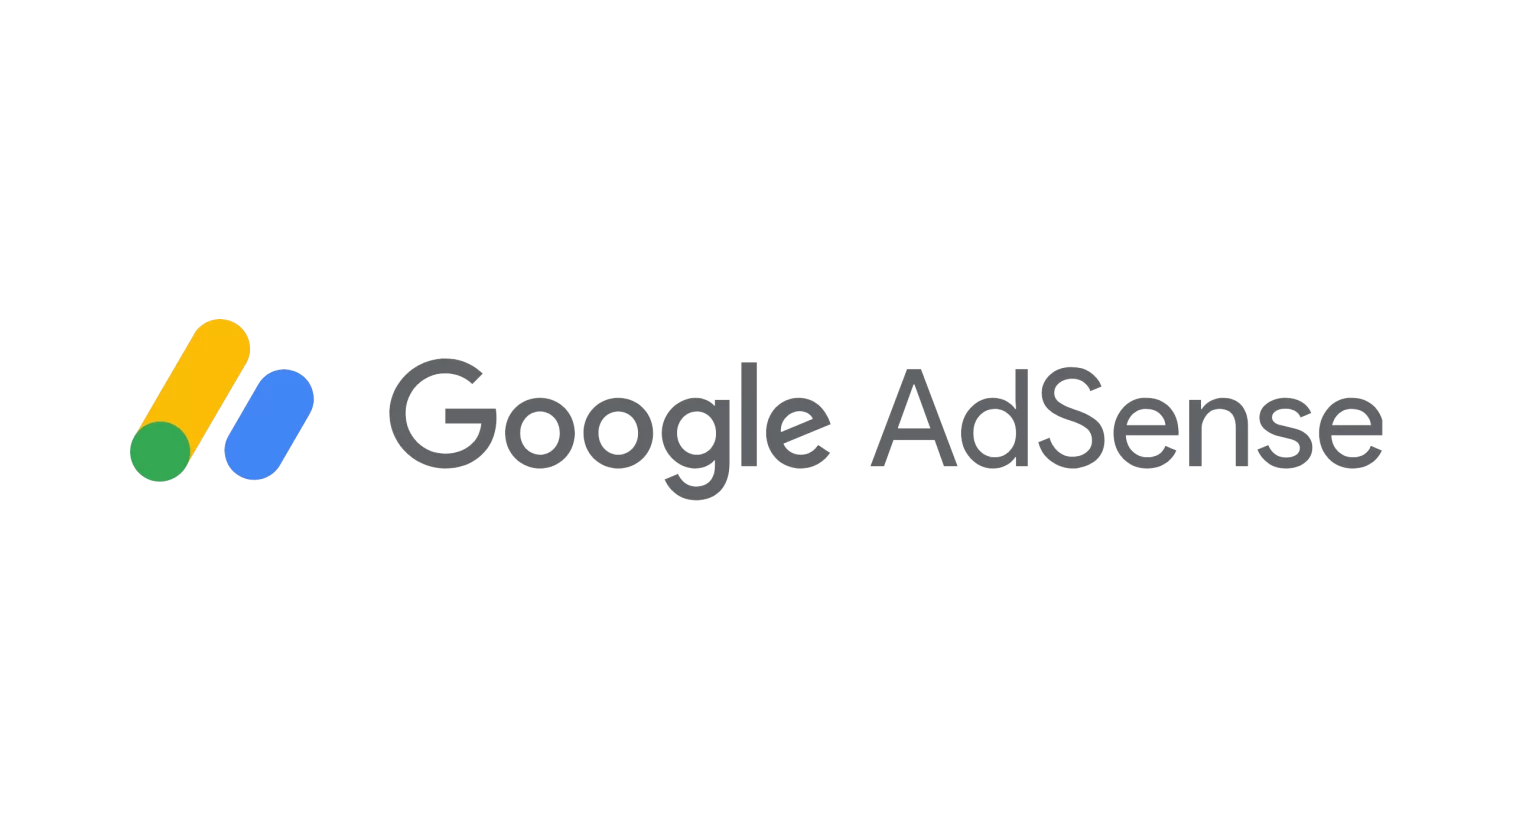 Buy Google AdSense Accounts